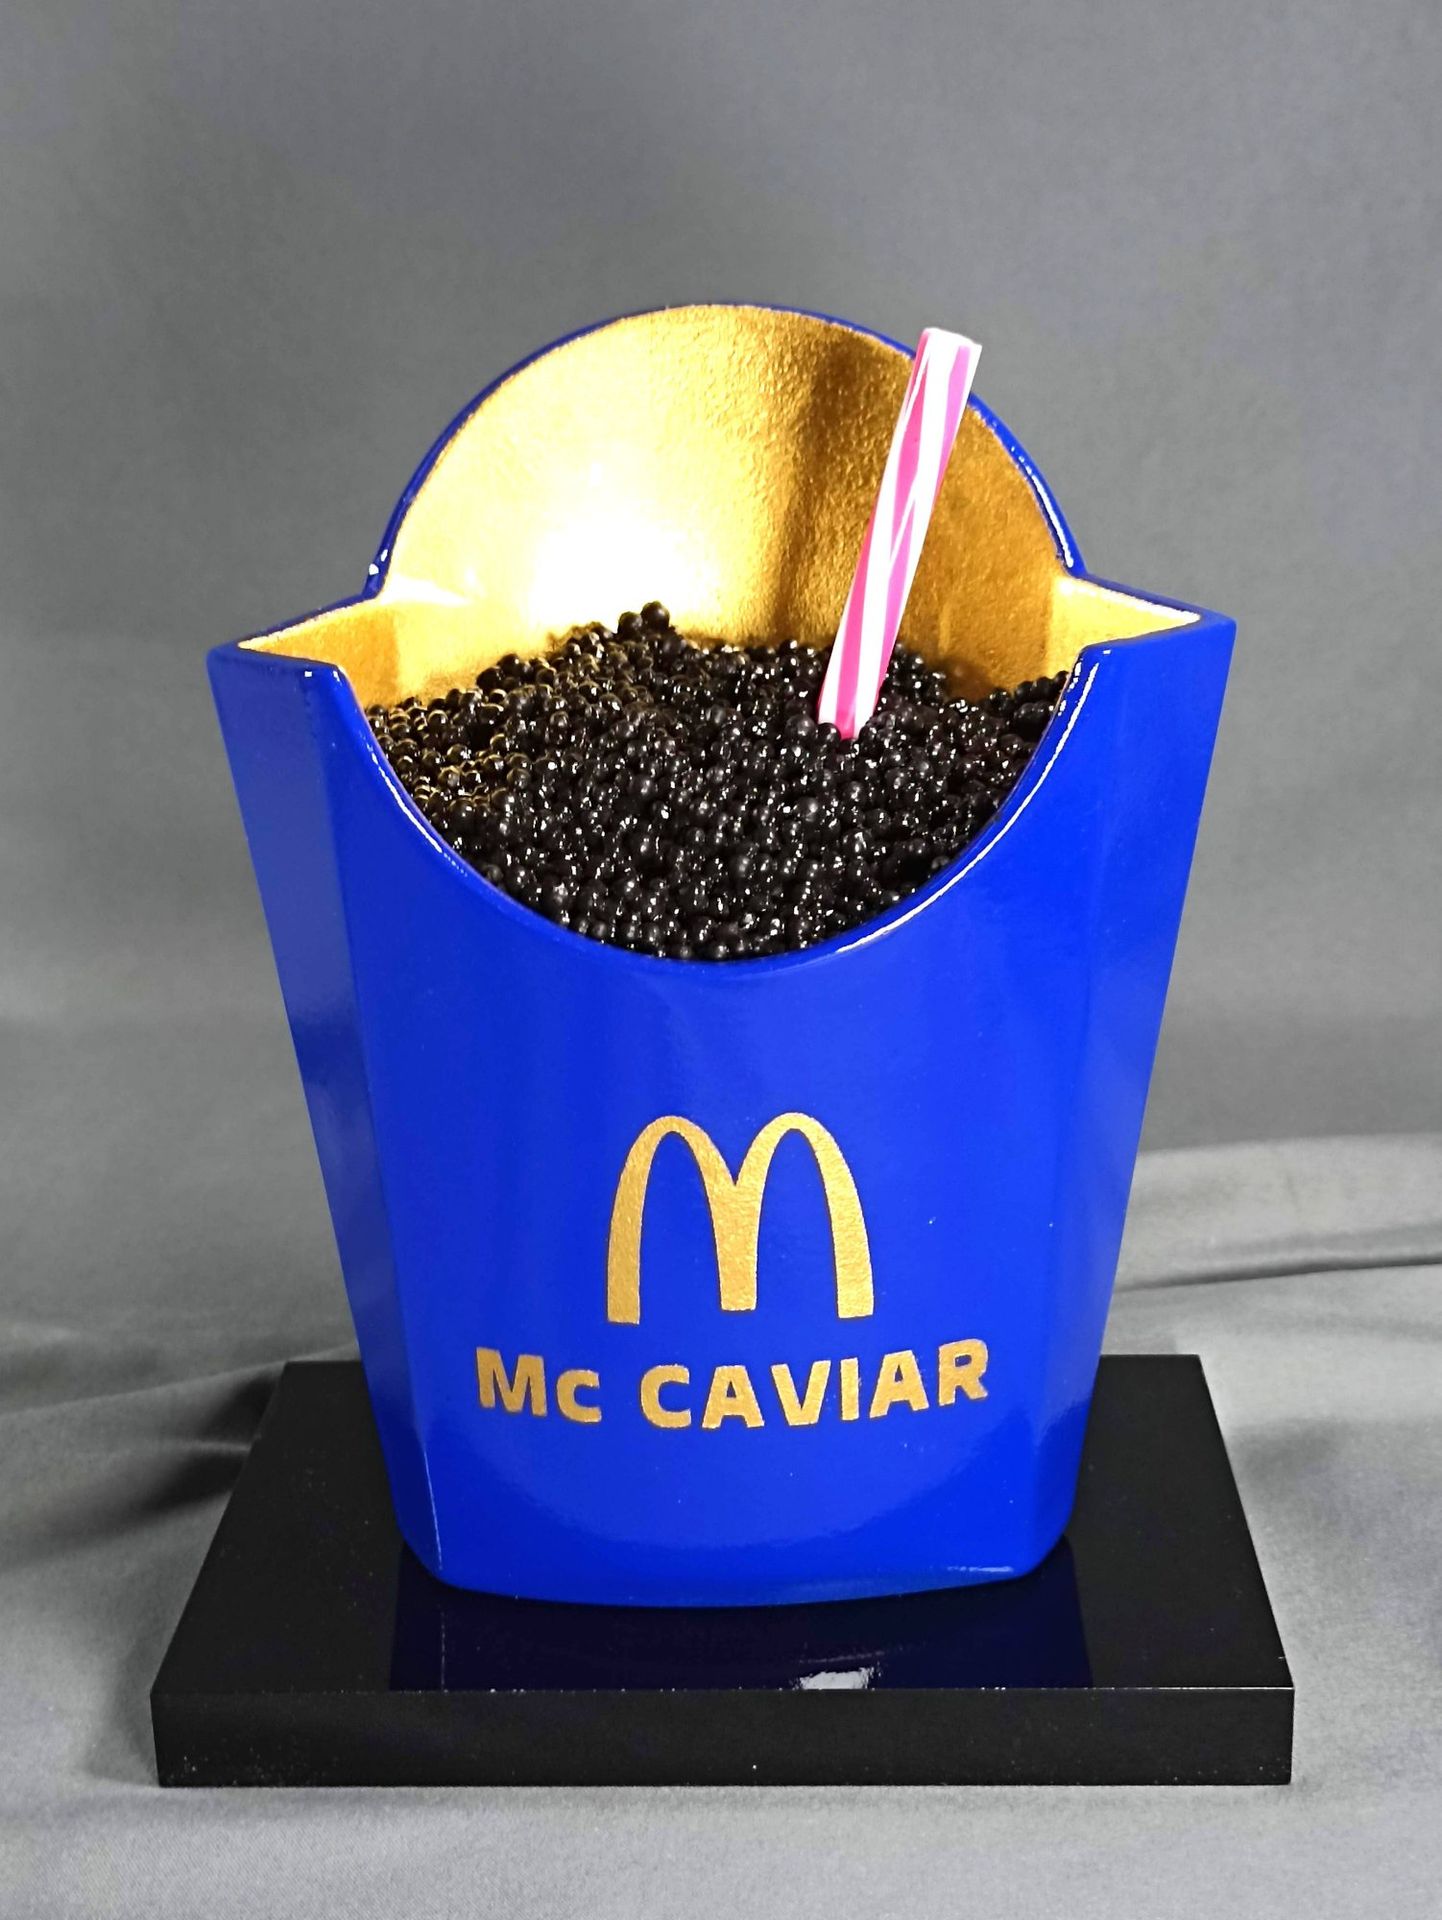 XTC MC CAVIAR 19CM GLOSSY BLUE - TURQUOISE STRAW 2/8
Large cone of Mc Caviar blu&hellip;